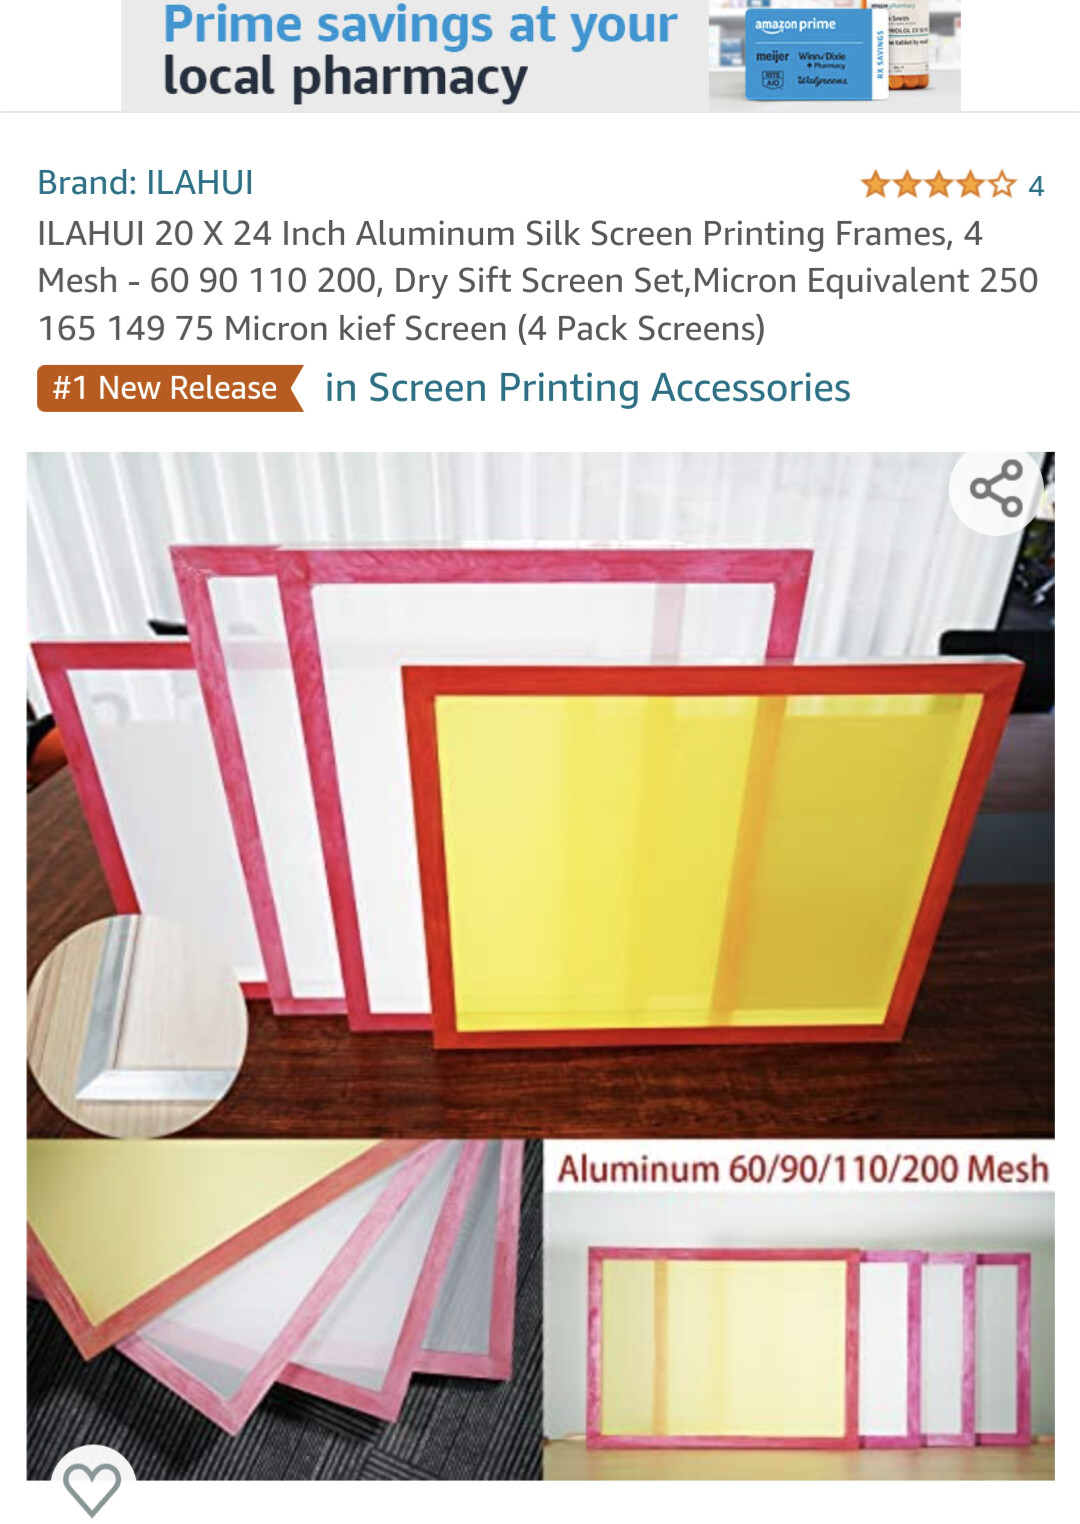 Dry Sift Hash Screens 60 90 110 200 mesh / 250 165 149 75 micron